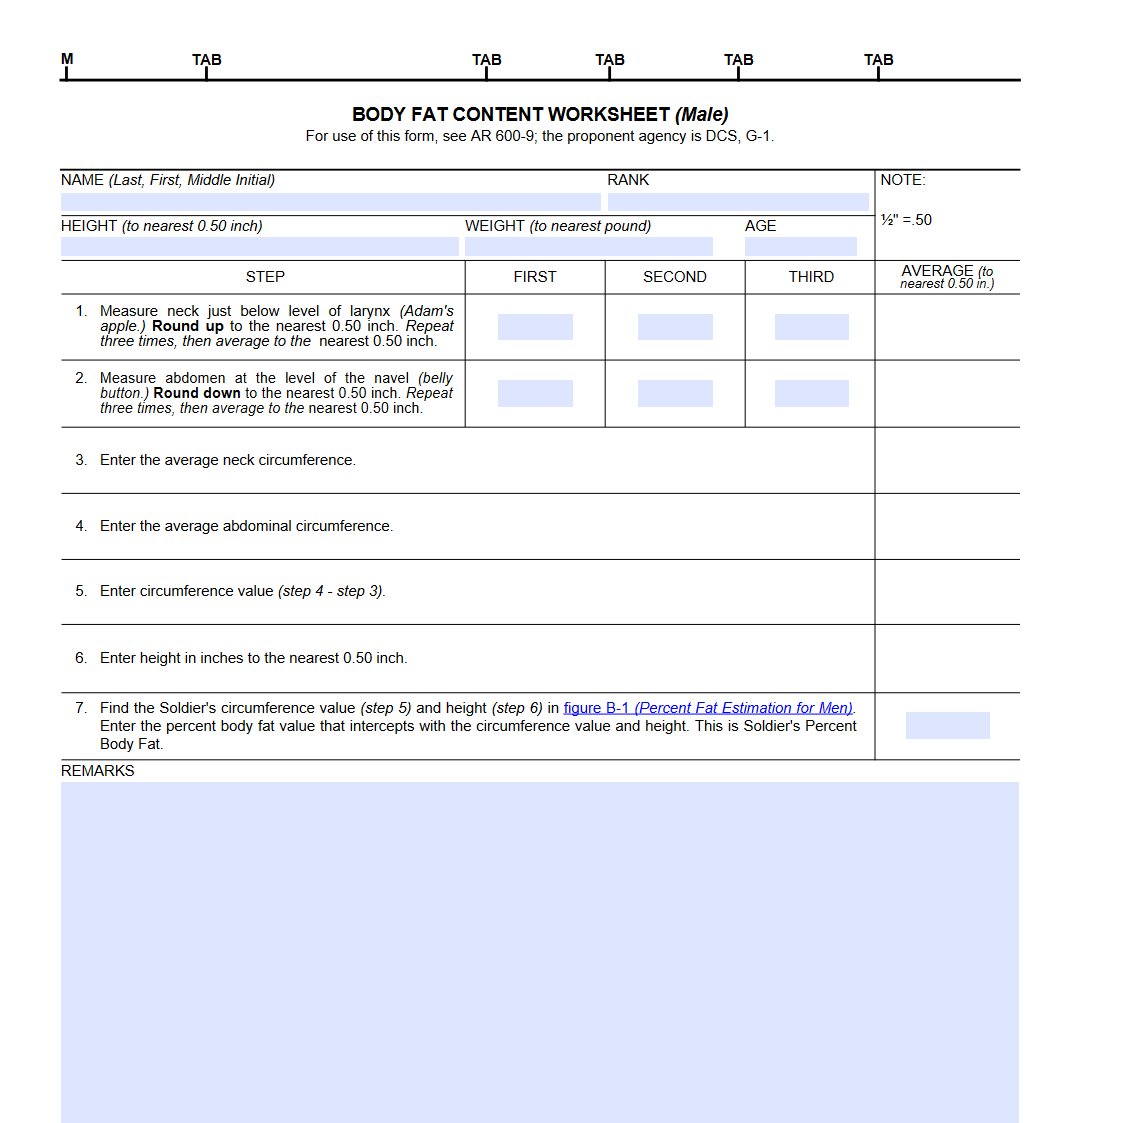 DA Form 5500. Body Fat Content Worksheet Forms Docs 2023